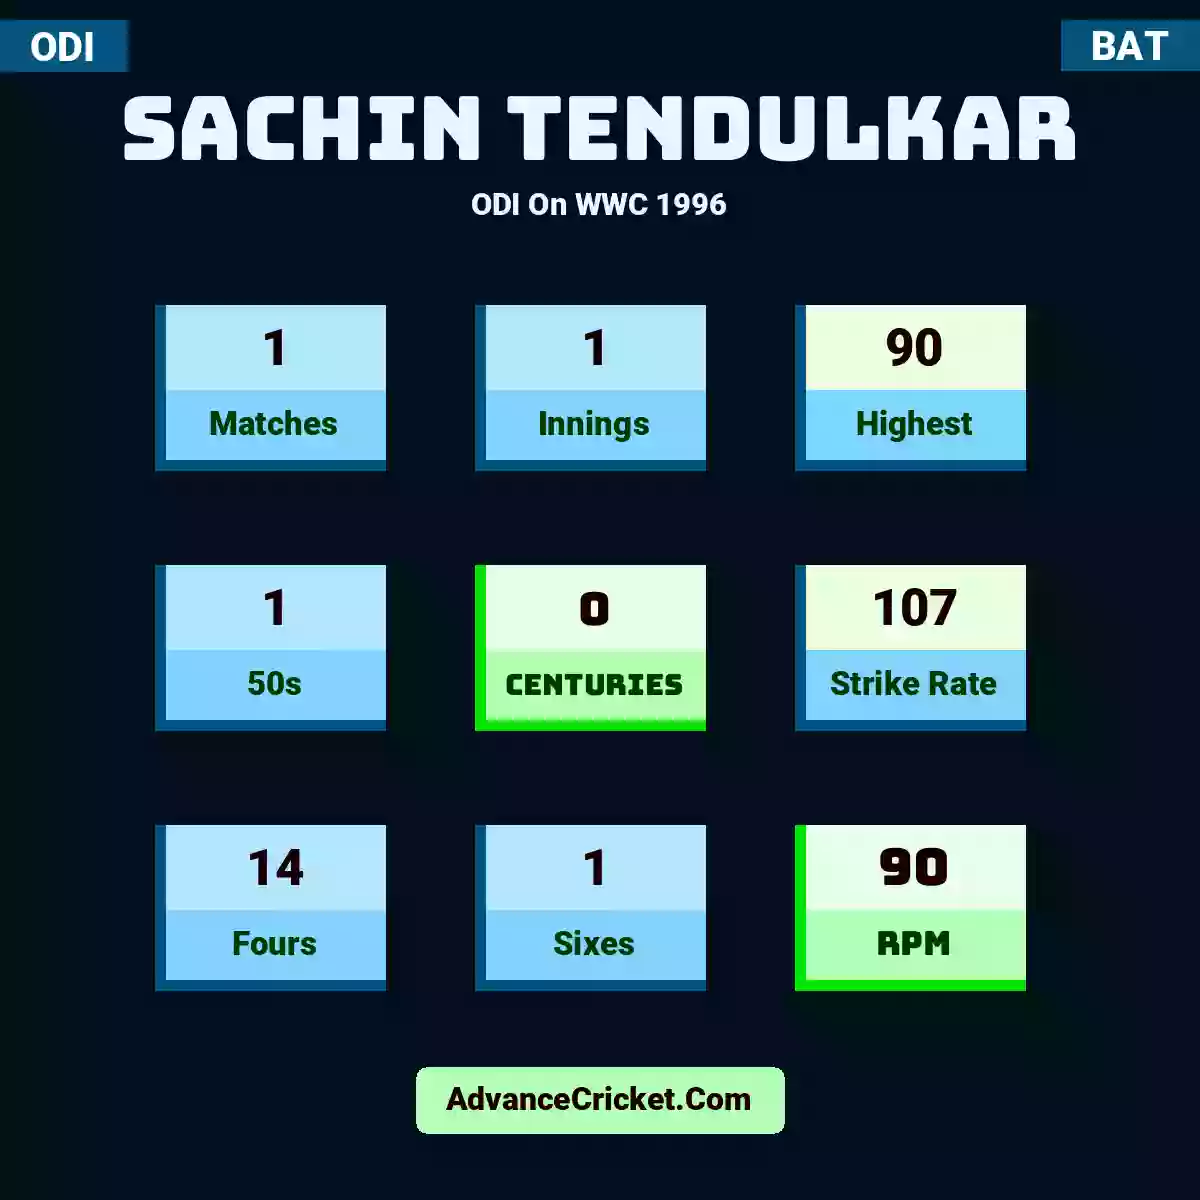 Sachin Tendulkar ODI  On WWC 1996, Sachin Tendulkar played 1 matches, scored 90 runs as highest, 1 half-centuries, and 0 centuries, with a strike rate of 107. S.Tendulkar hit 14 fours and 1 sixes, with an RPM of 90.